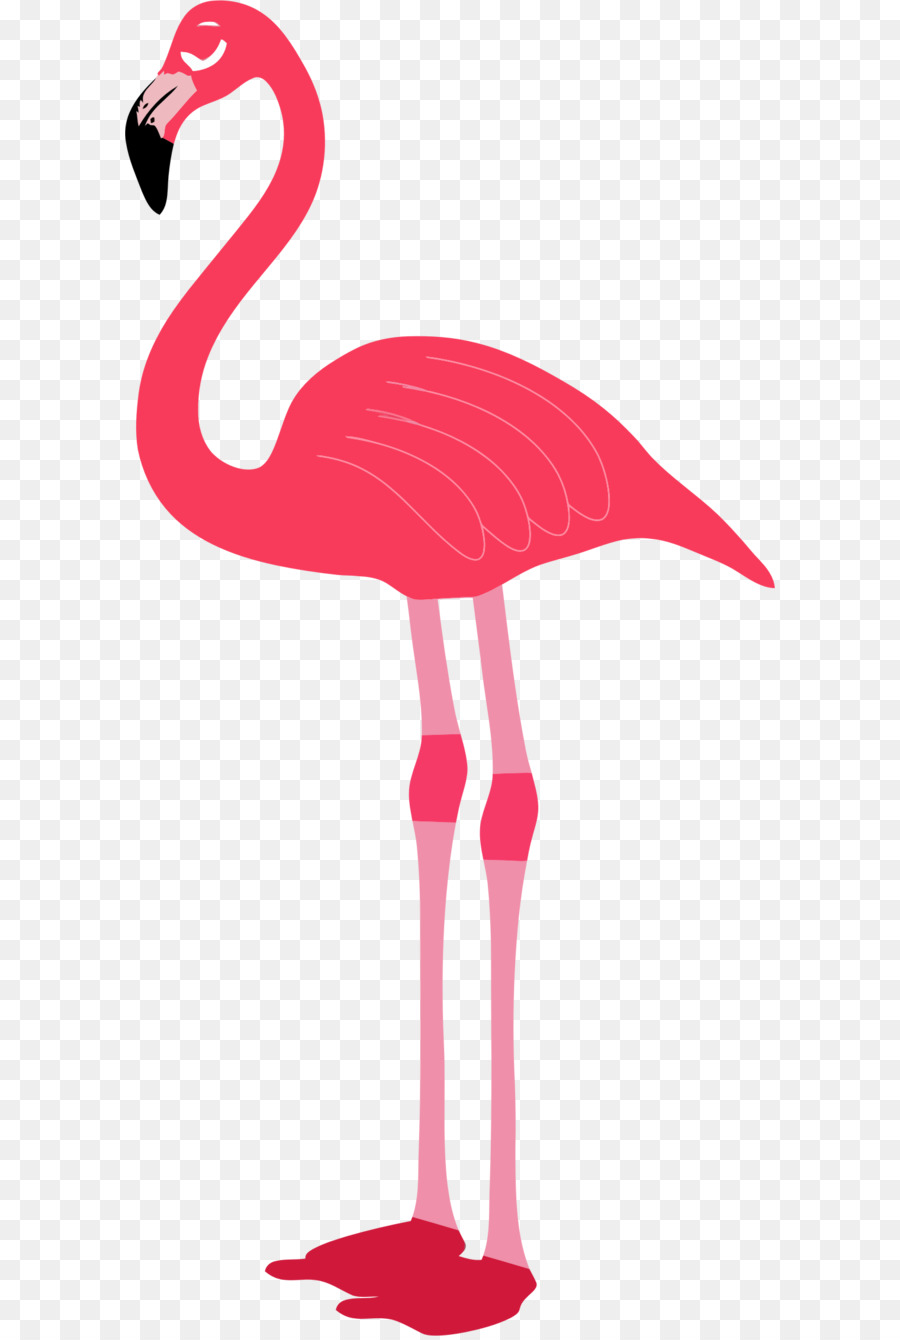 Flamingos Download Computer file - Flamingo PNG png download - 1098*2256 - Free Transparent Flamingo png Download.